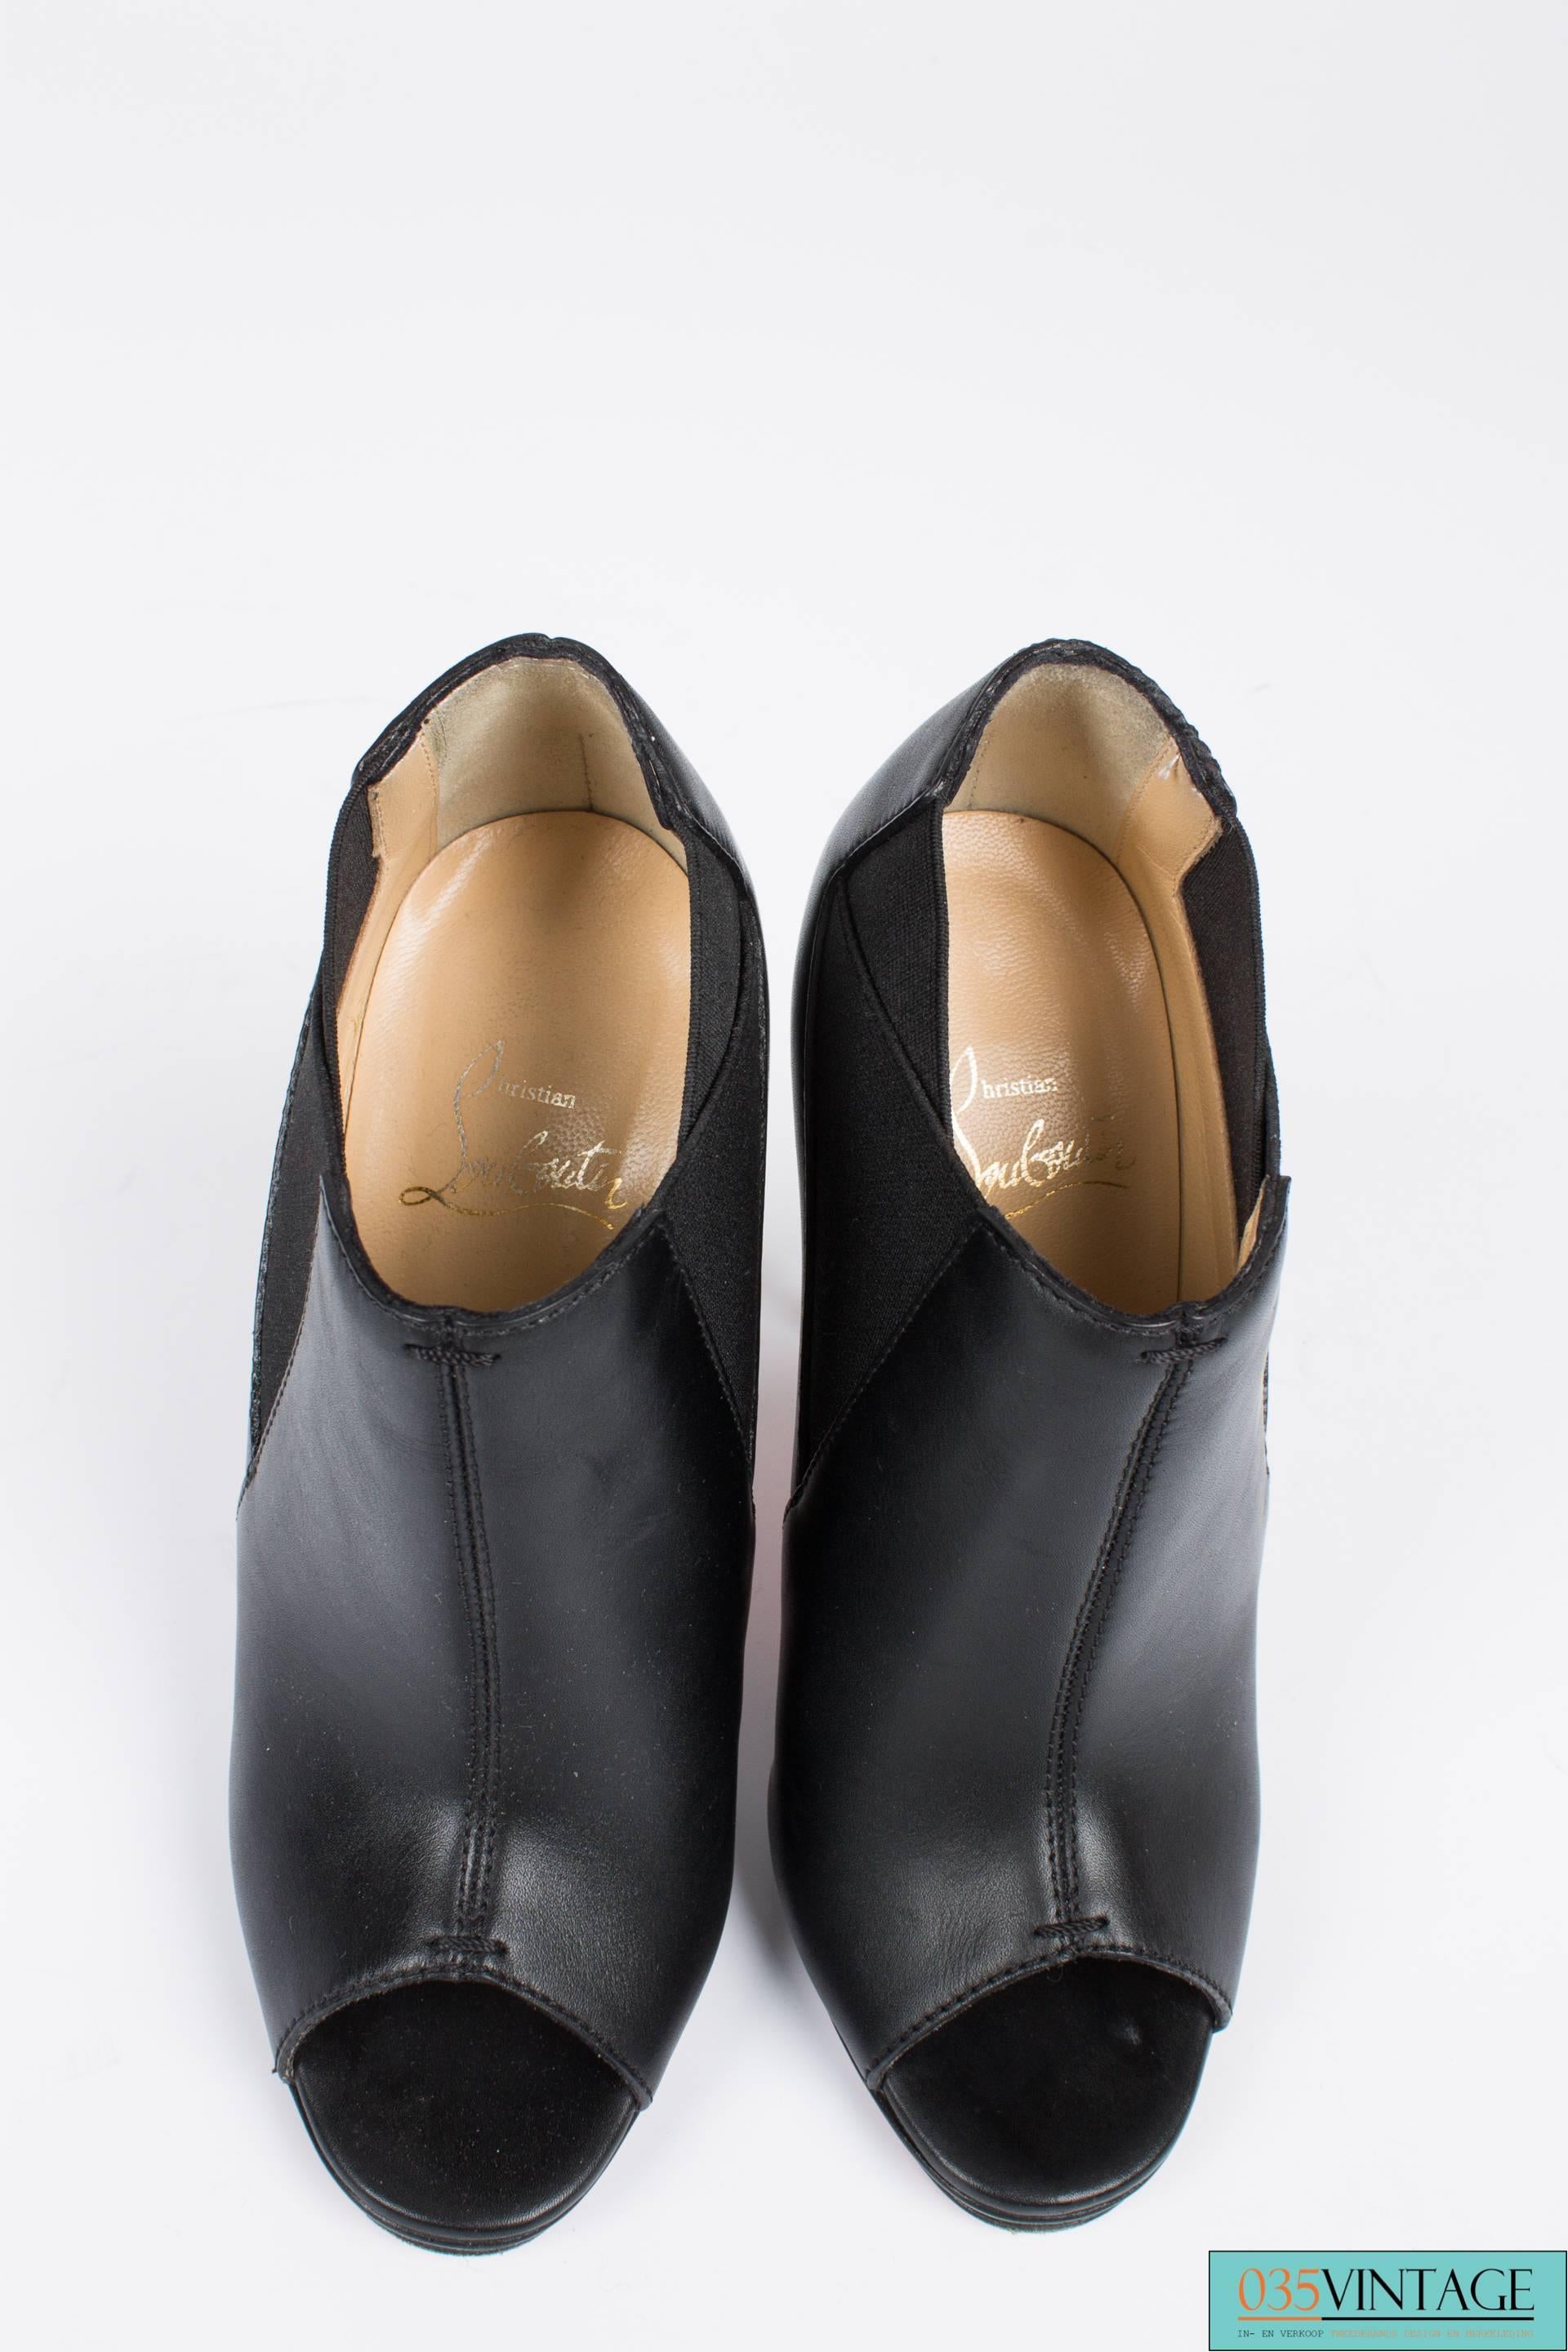 Women's Louboutin High Heeled Peep Toe Boots - black leather 